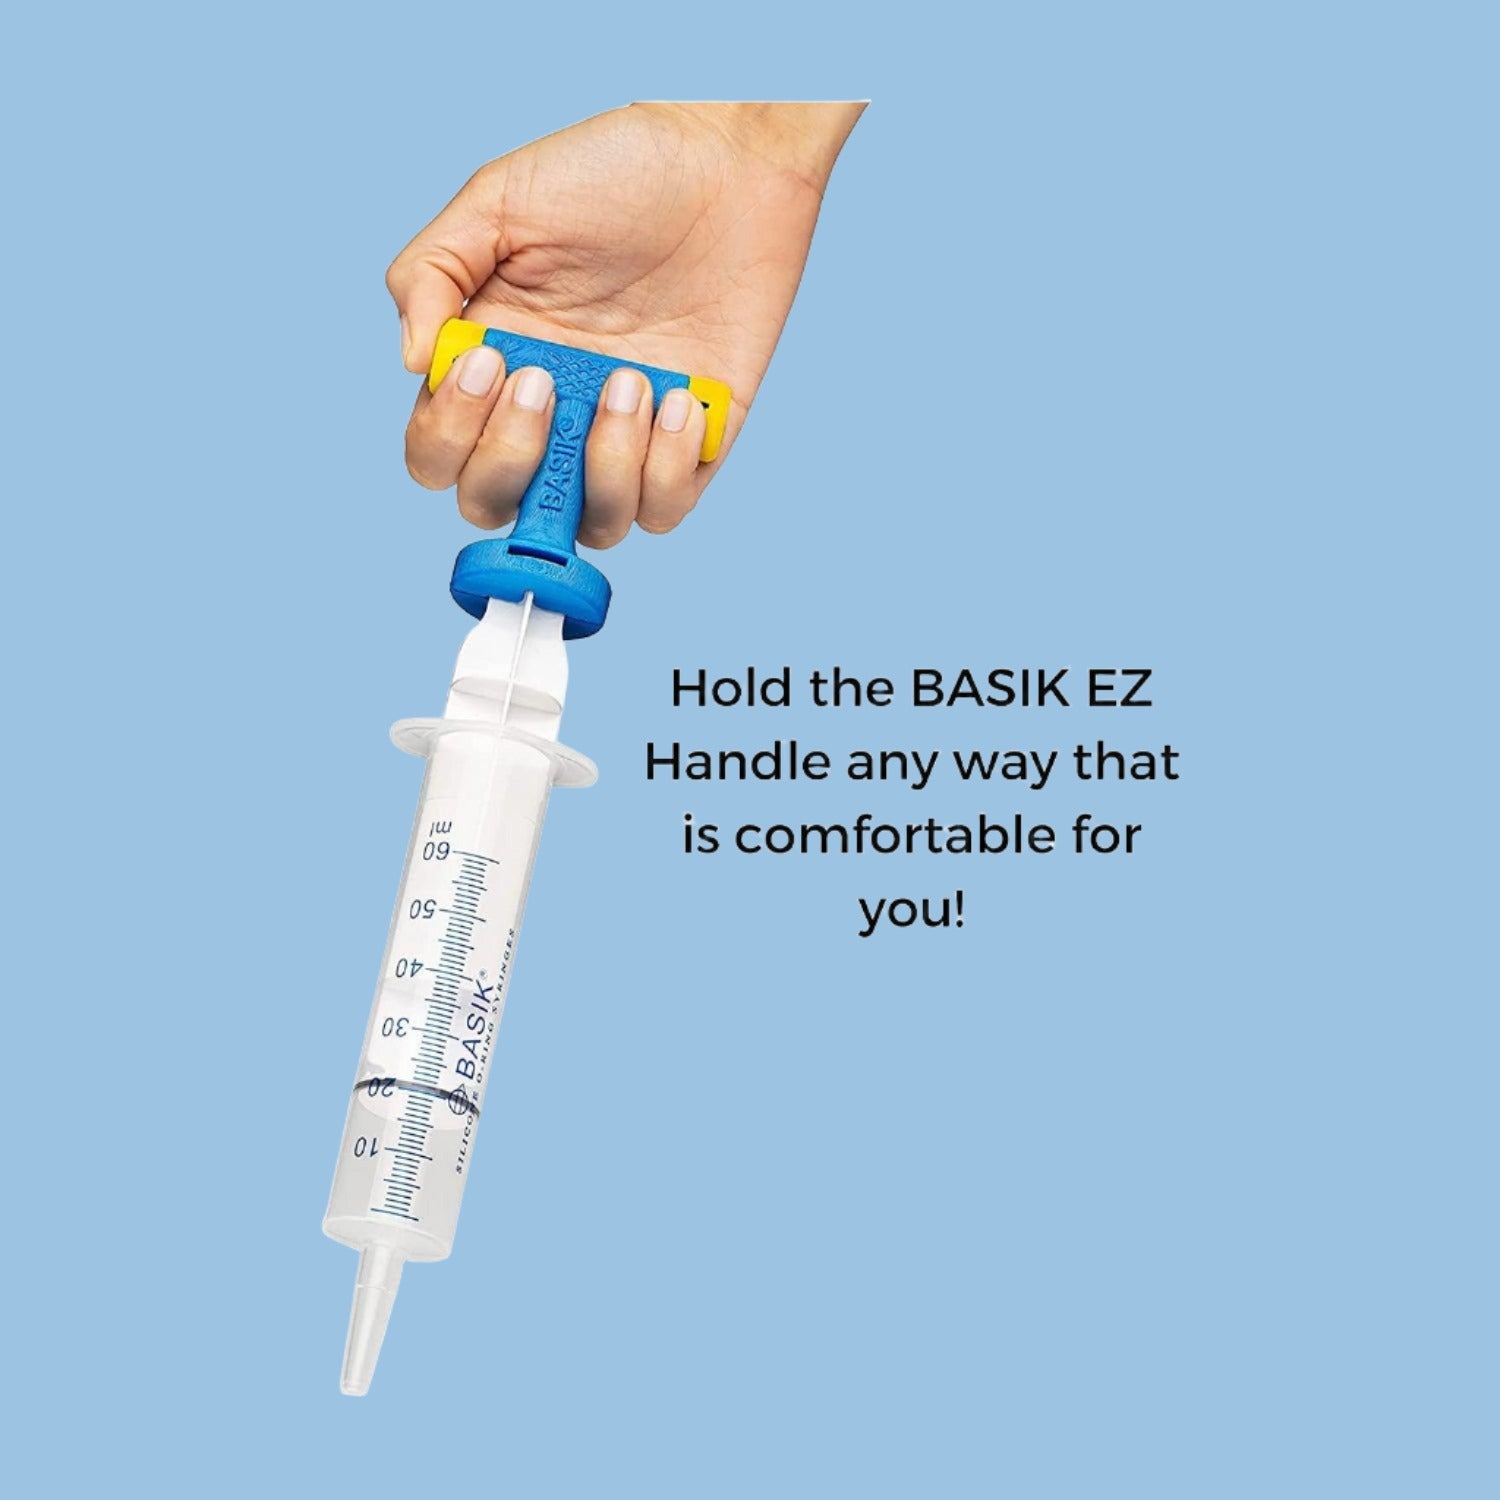 'Basik EZ' Syringe Assist Plunger Handle (Designed for Enteral Tube Feeding) - Anjelstore 